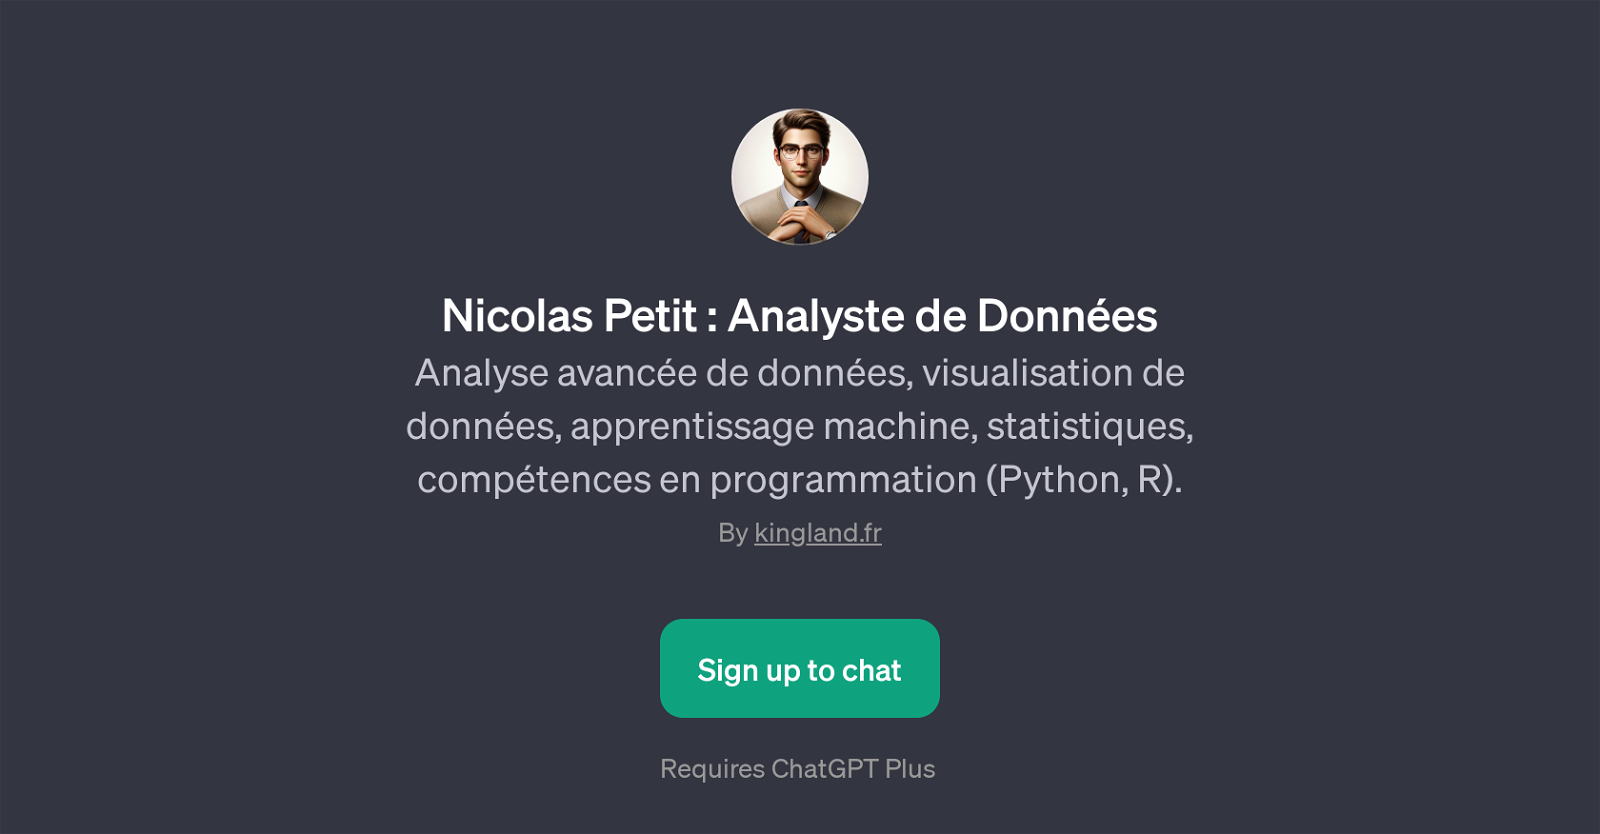 Nicolas Petit : Analyste de Donnes website